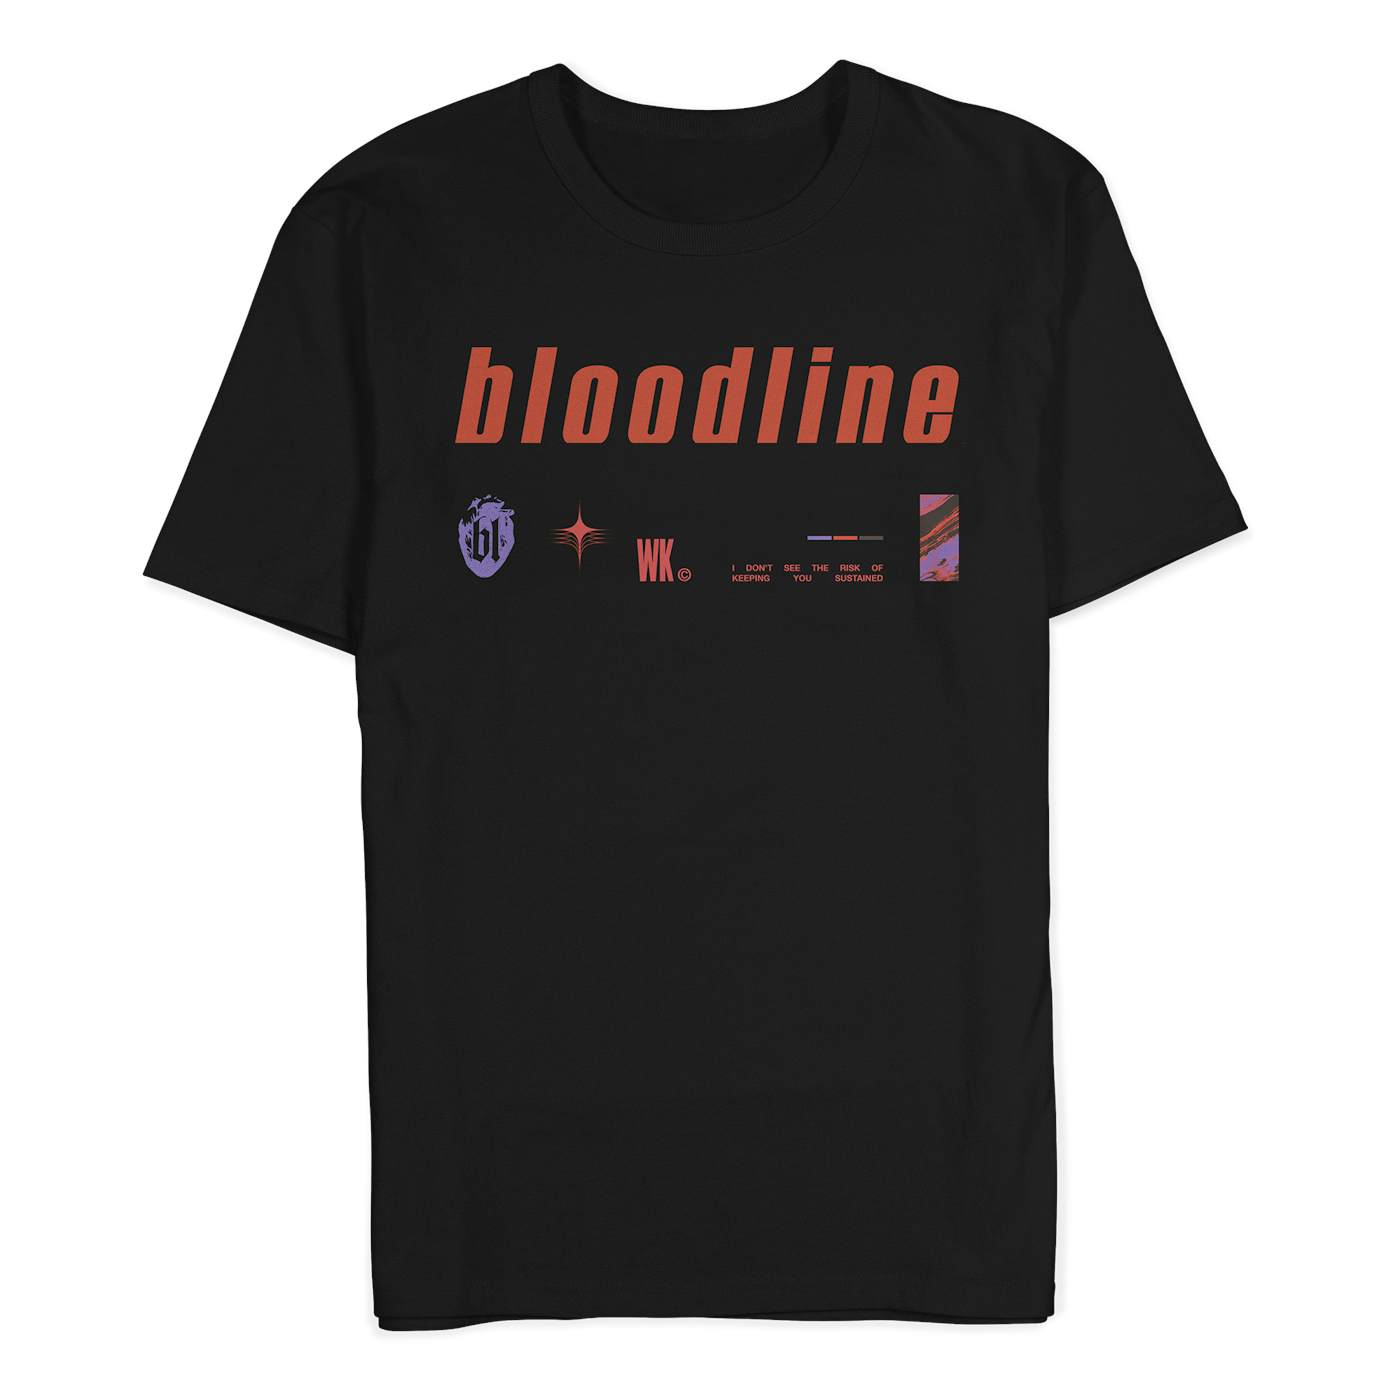 Bloodline - No Integrity Shirt